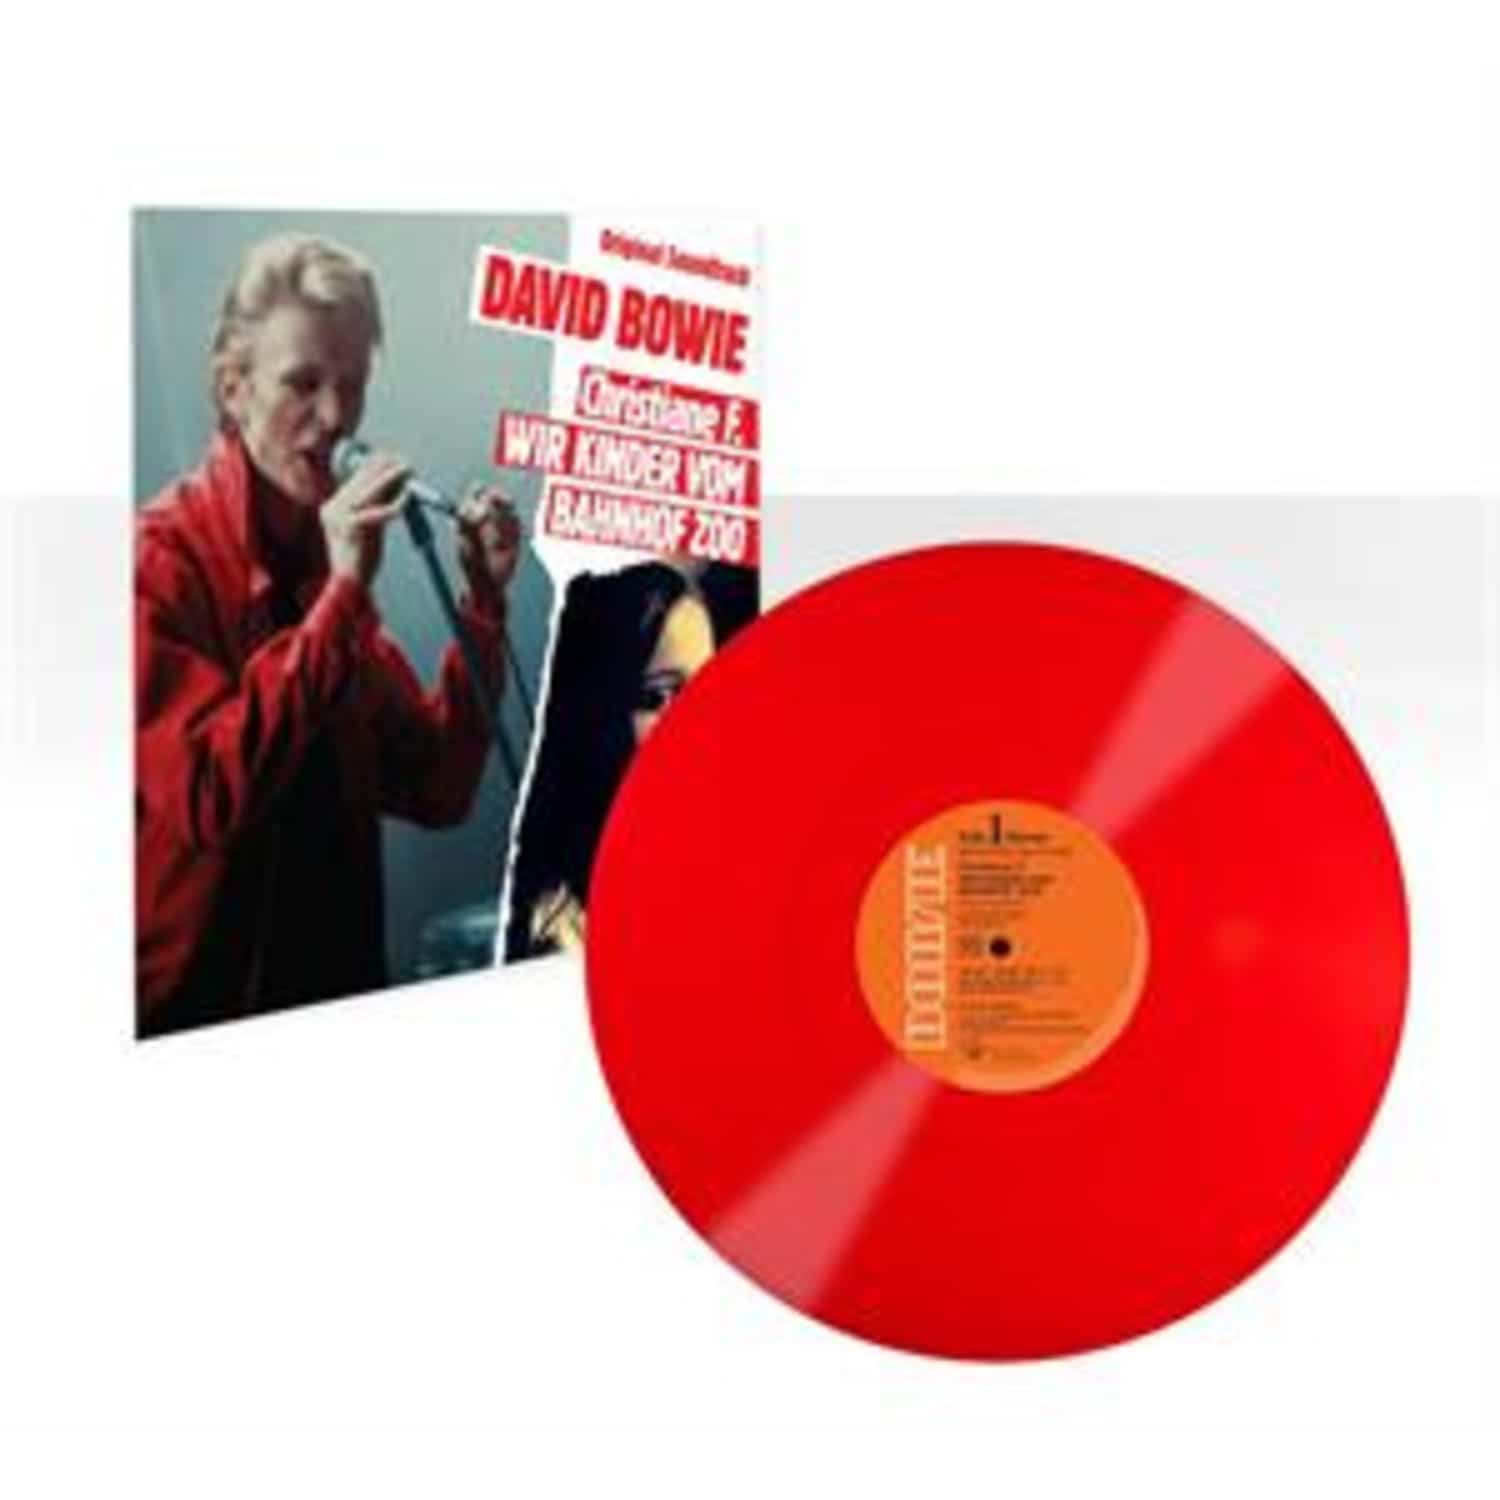 David Bowie - CHRISTIANE F WIR KINDER VOM BAHNHOFF ZOO 